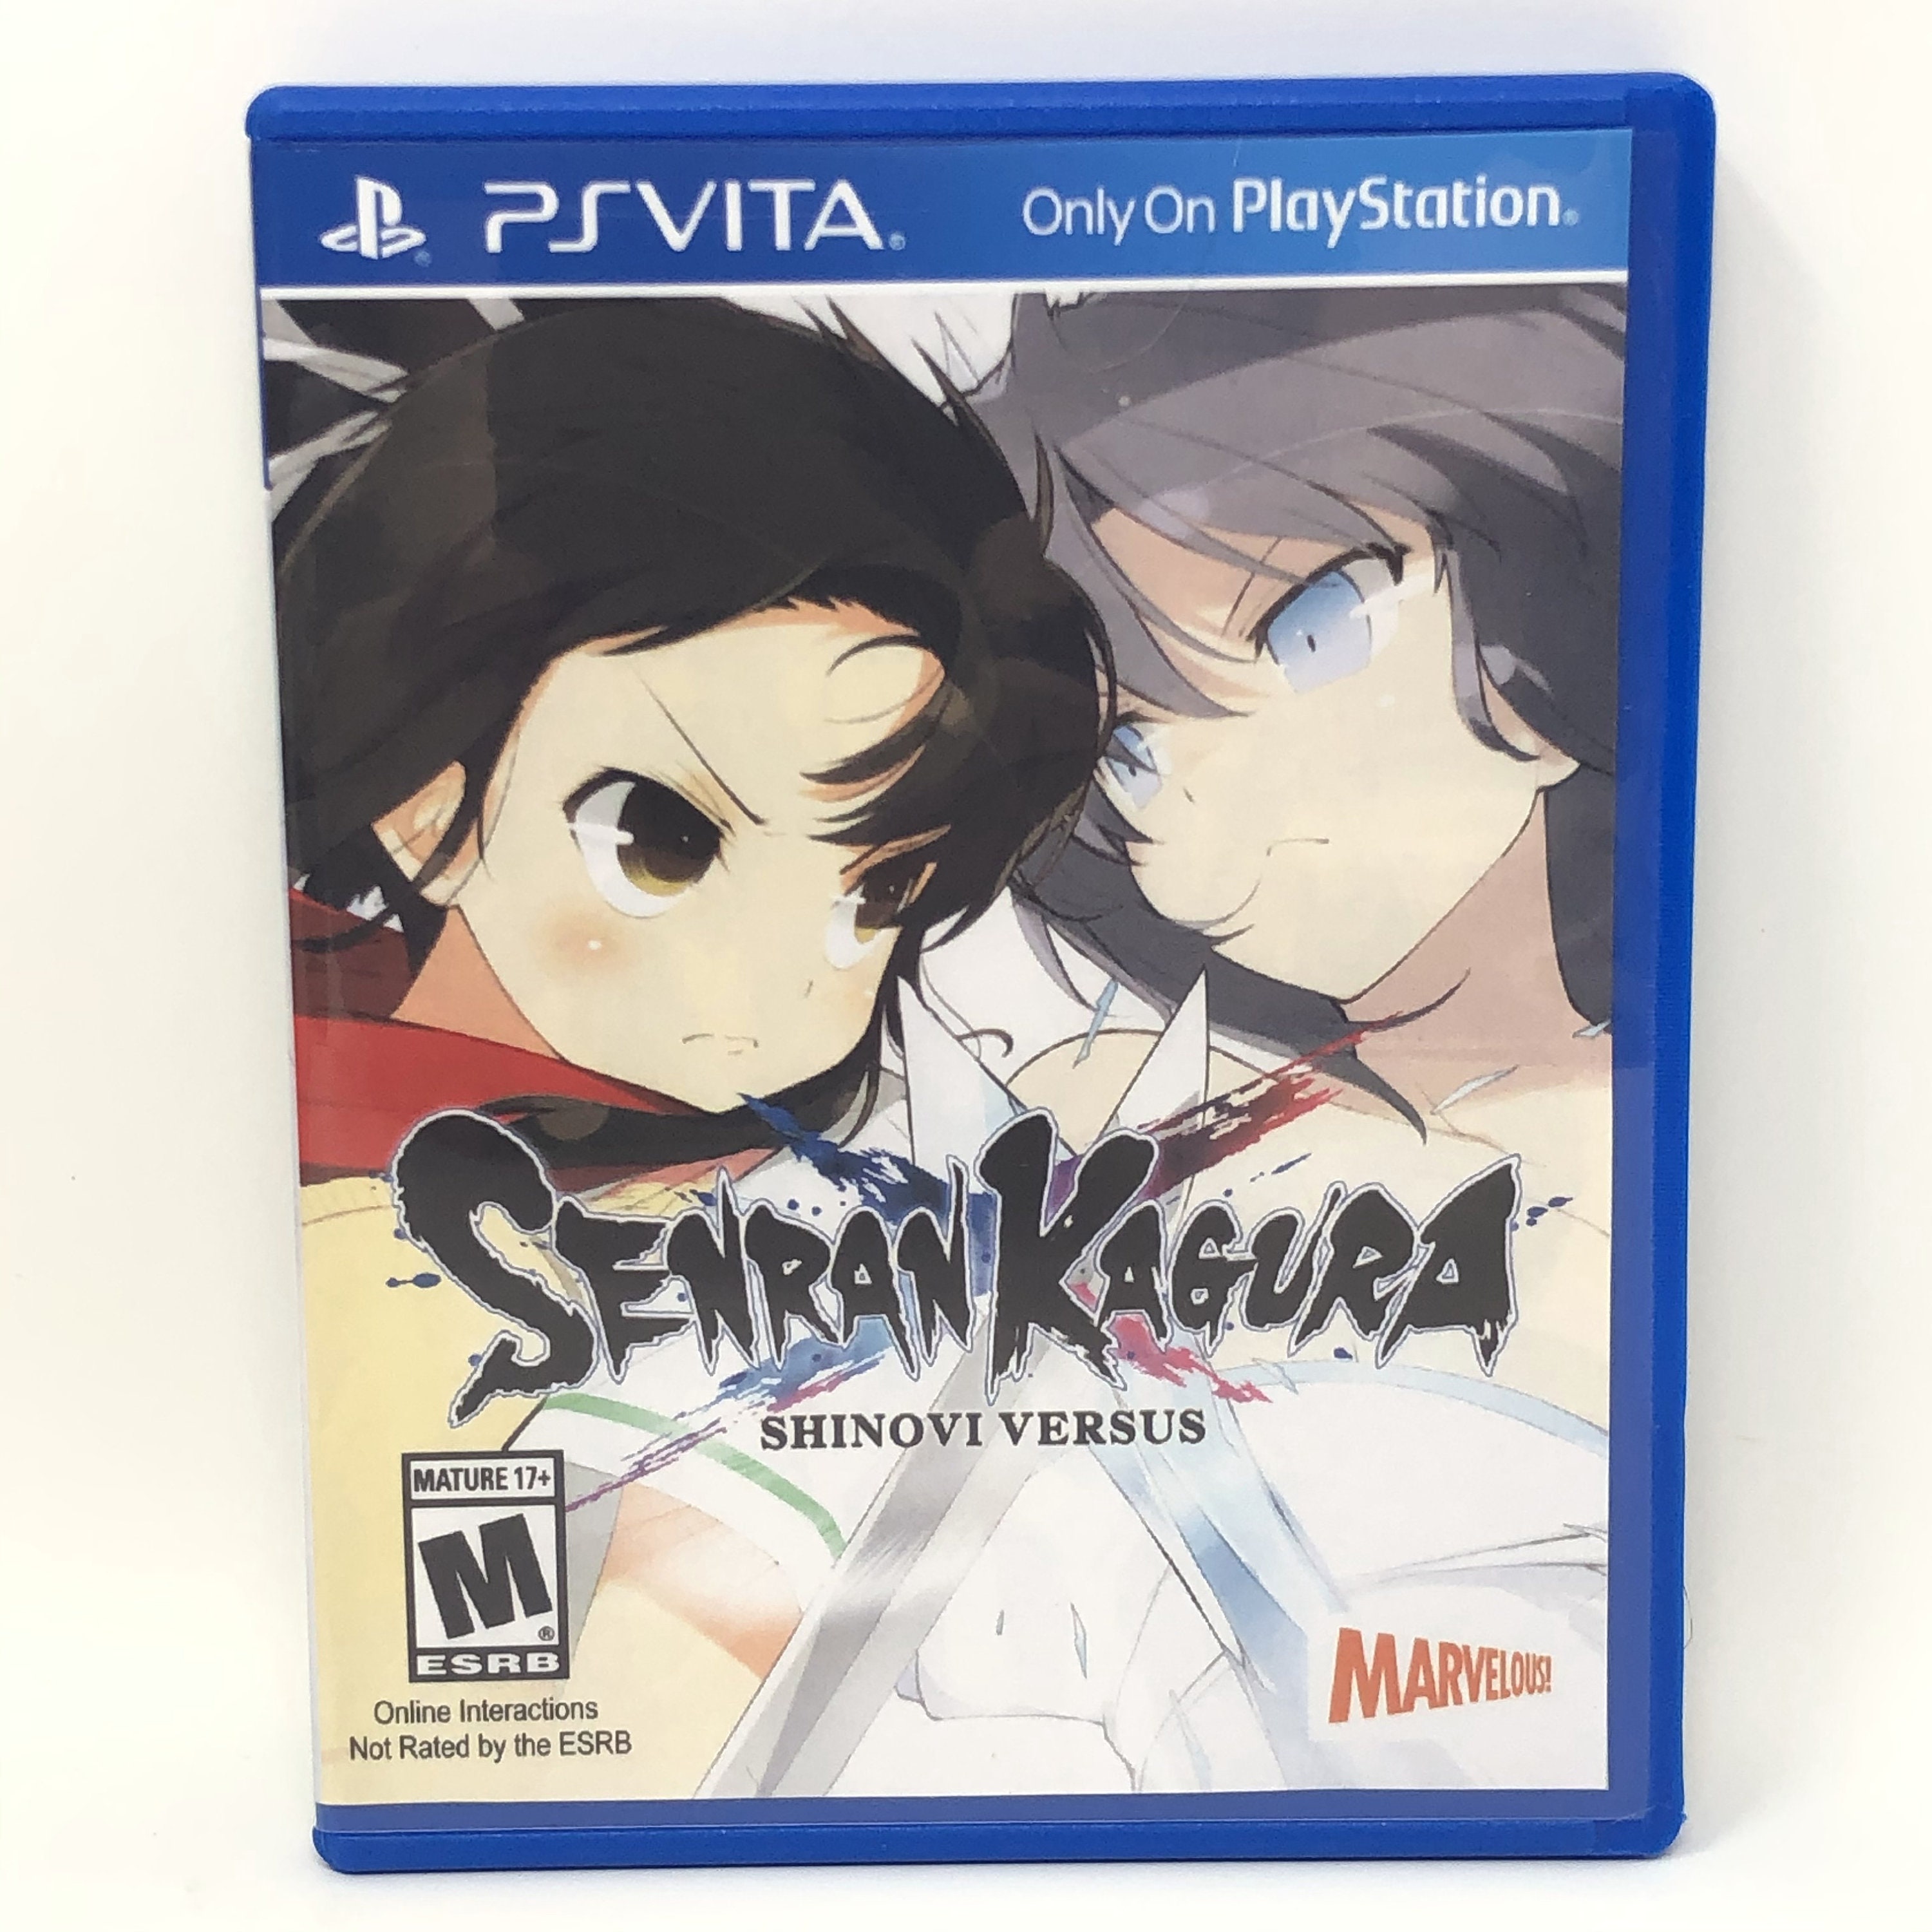 Senran Kagura: Shinovi Versus sony PS Vita Replacement CASE 